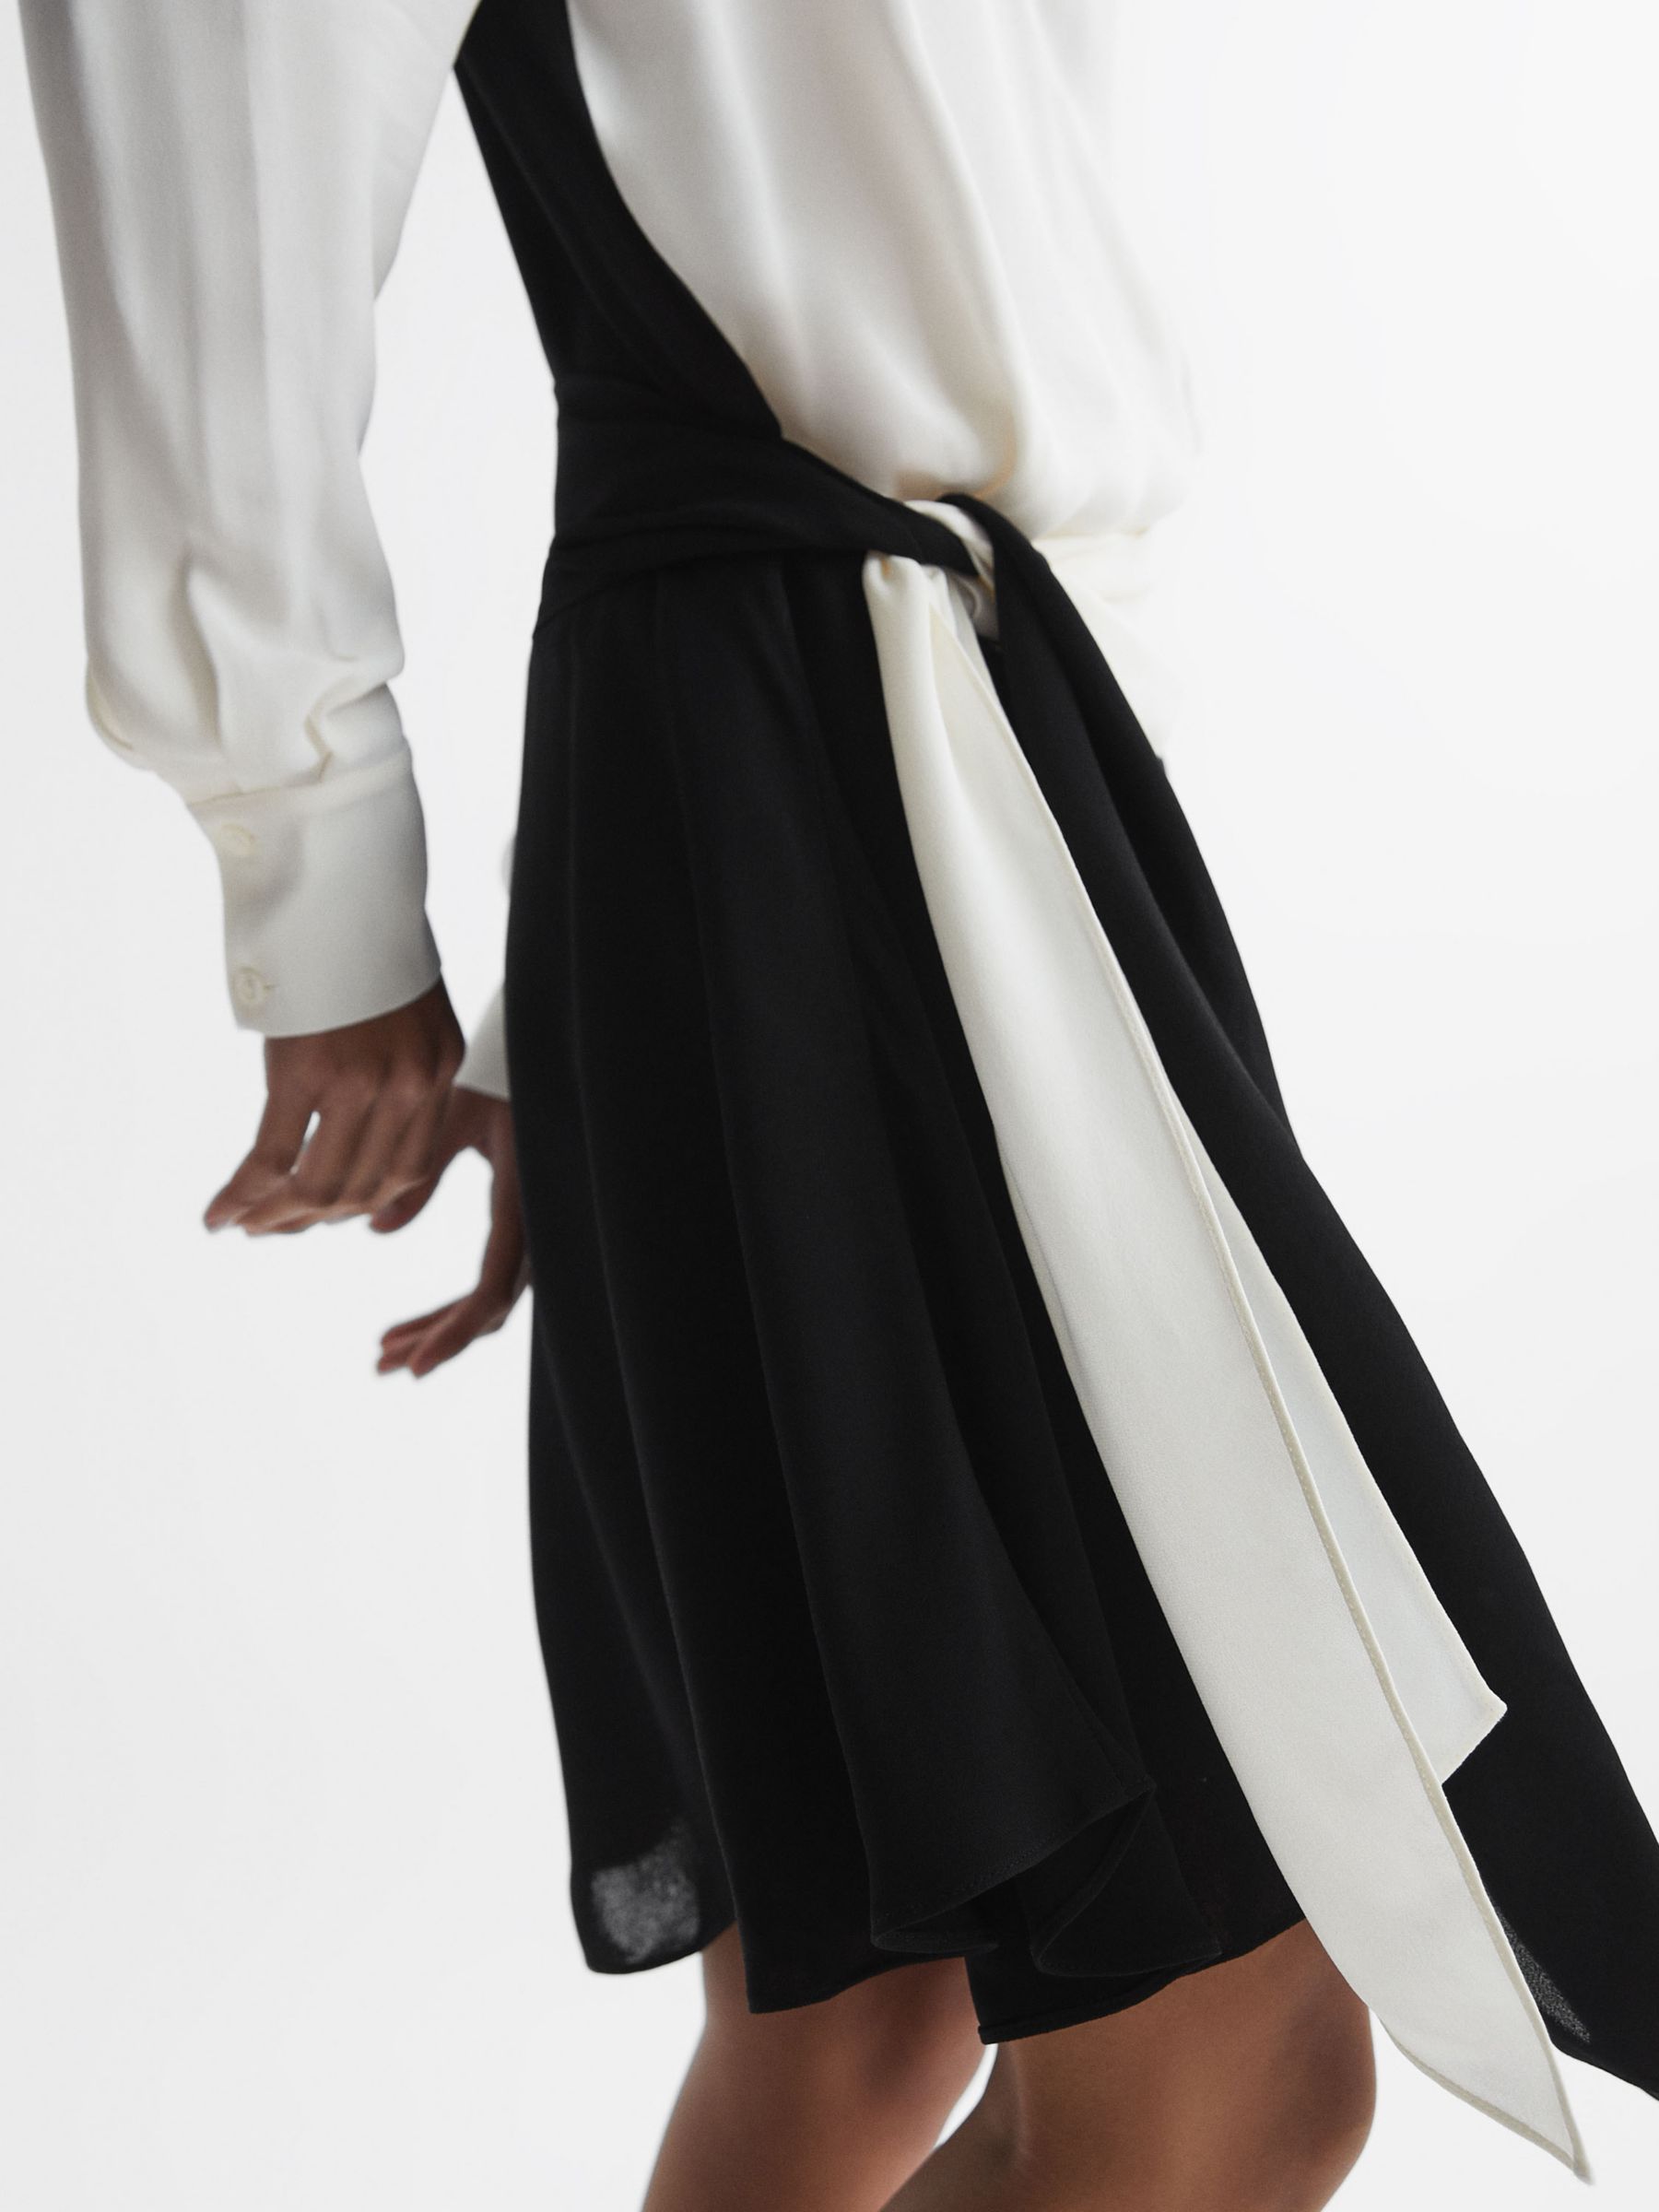 Reiss Sadie Colourblock Belted Mini Dress, Ivory/Black, 6